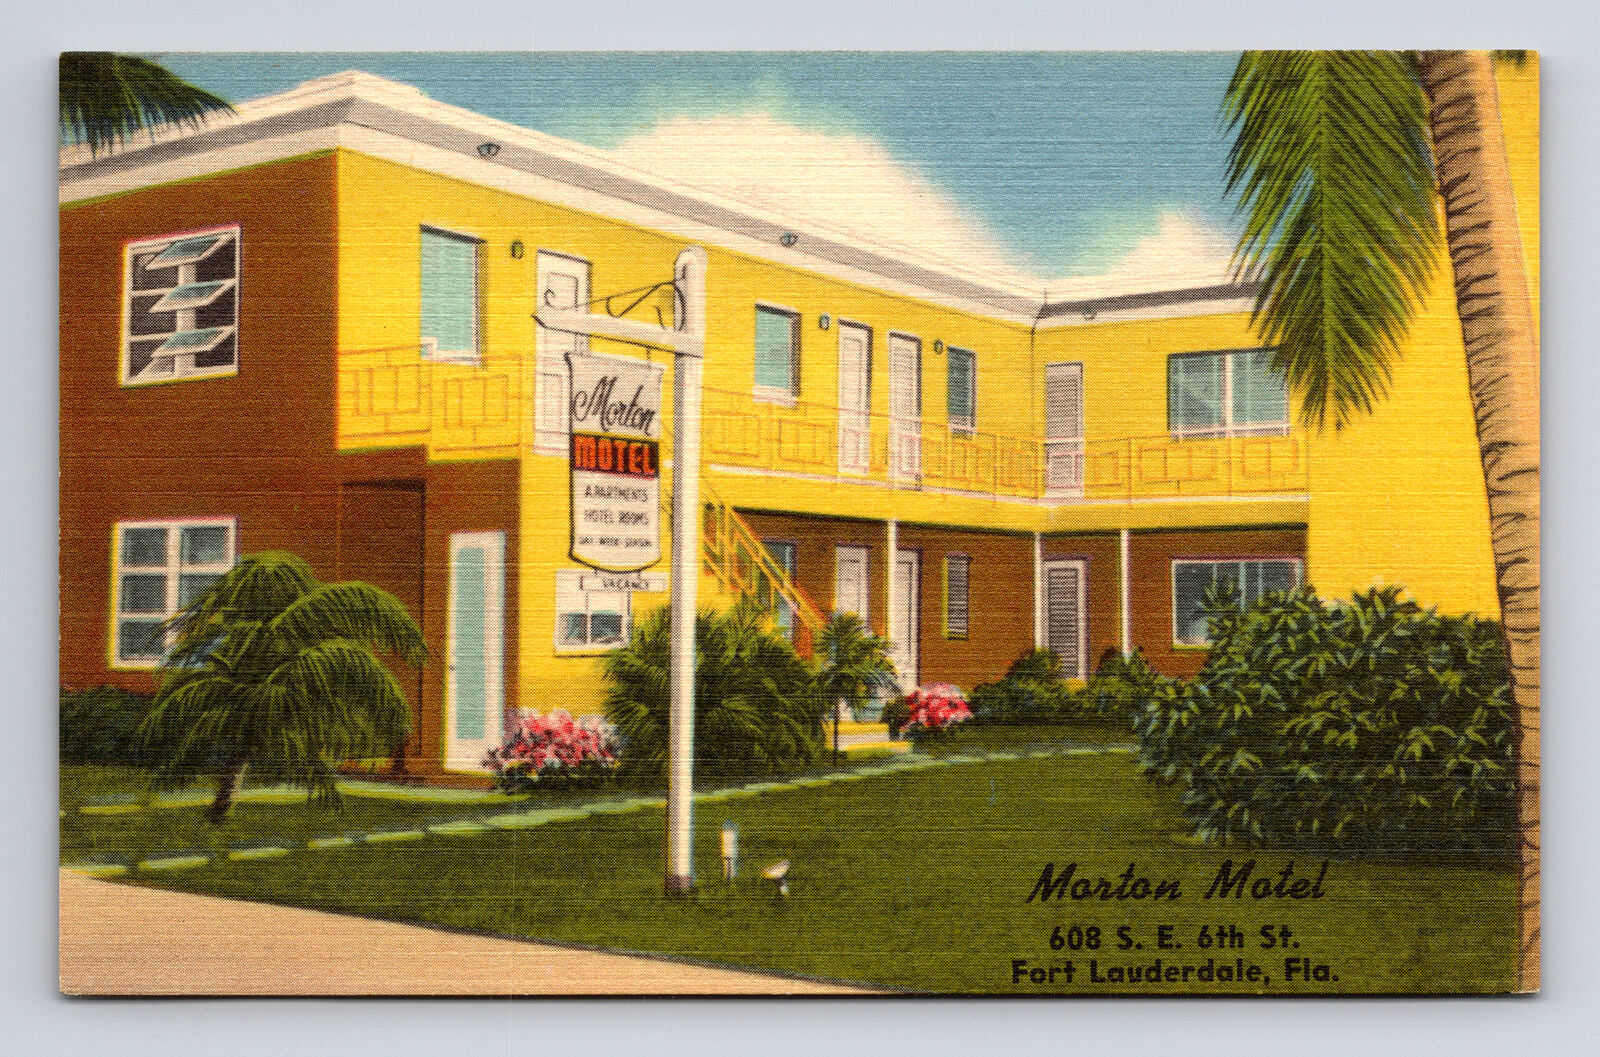 Morton Motel US 1 Fort Lauderdale Florida FL Roadside America Postcard